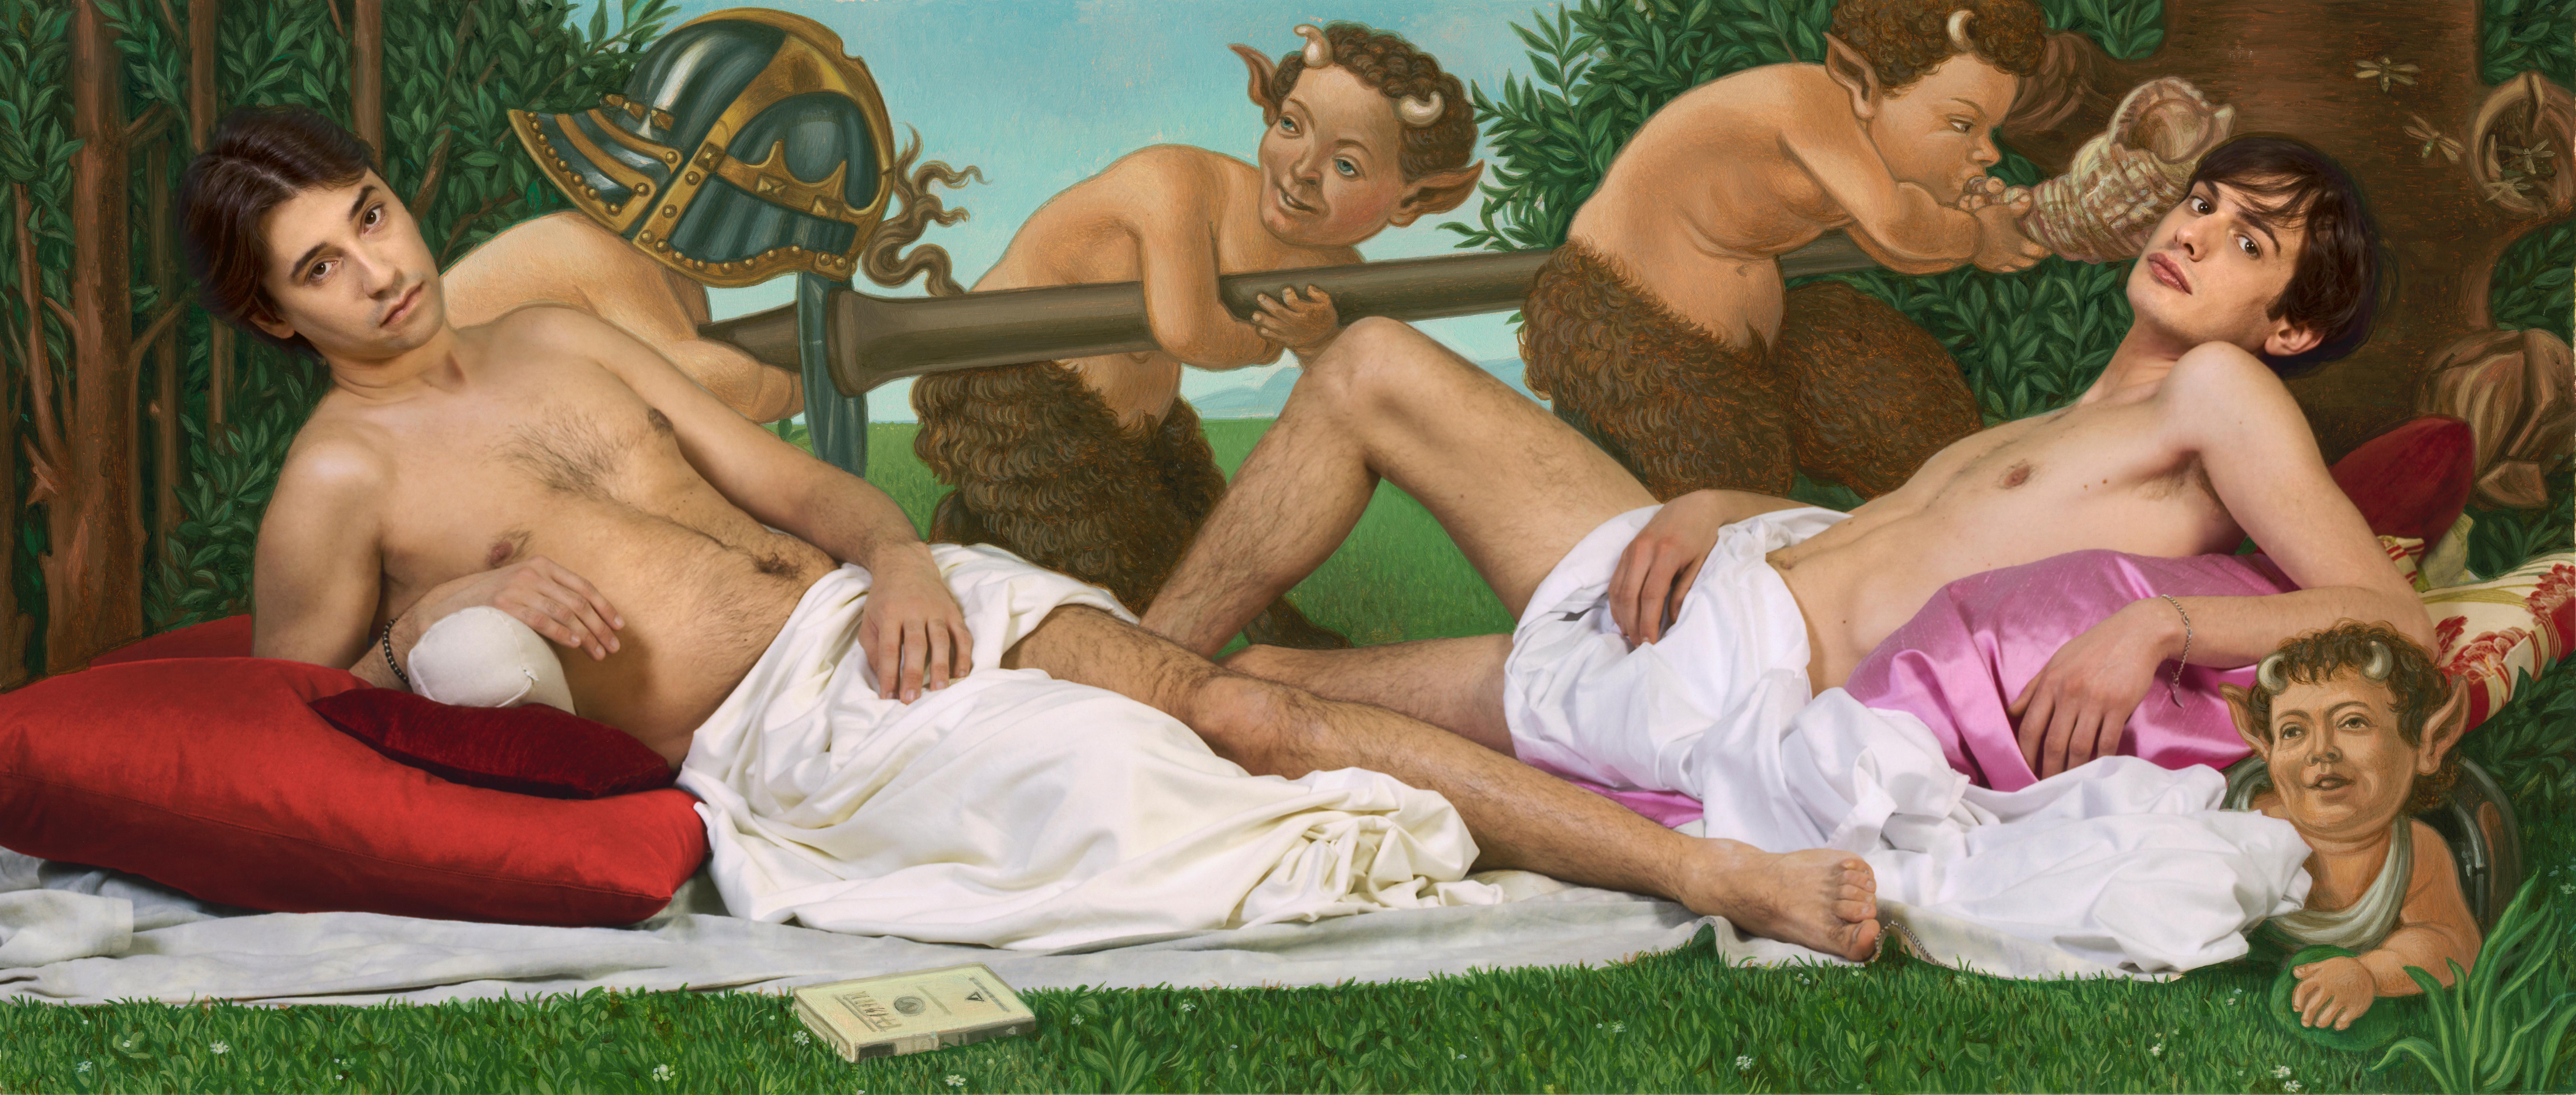 E2 - Kleinveld & Julien Nude Photograph - Ode to Botticelli's Venus & Mars